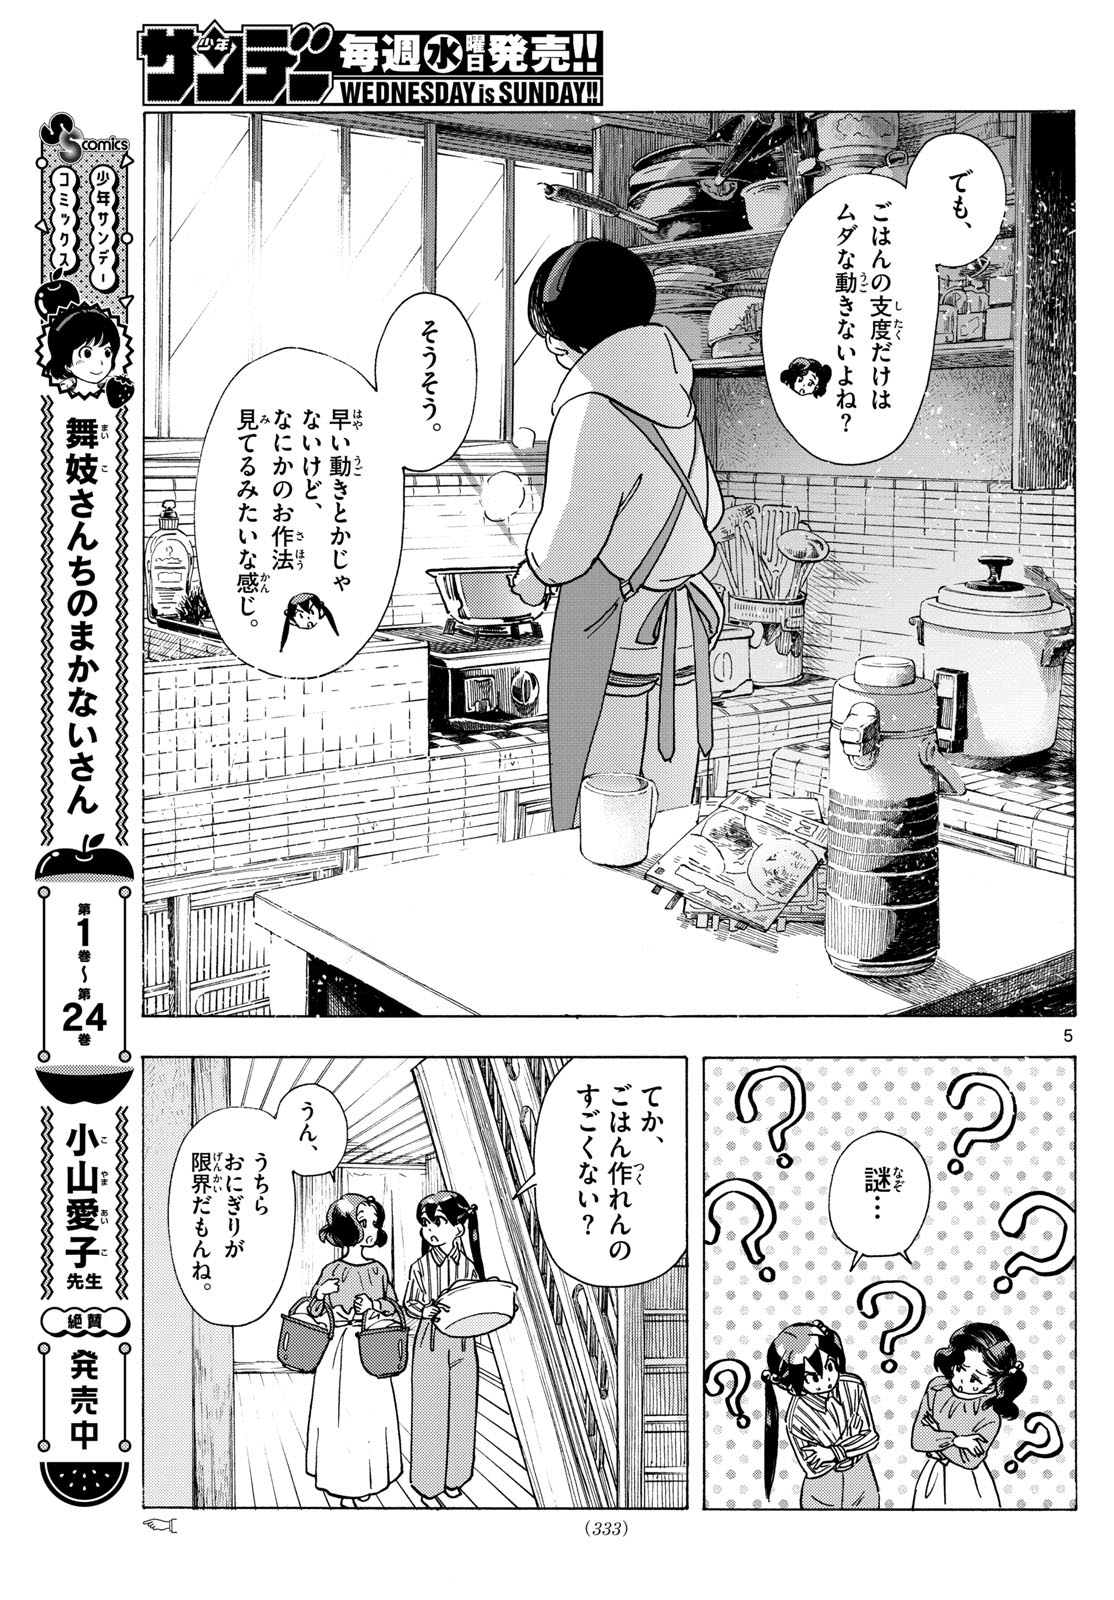 Maiko-san Chi no Makanai-san - Chapter 289 - Page 5